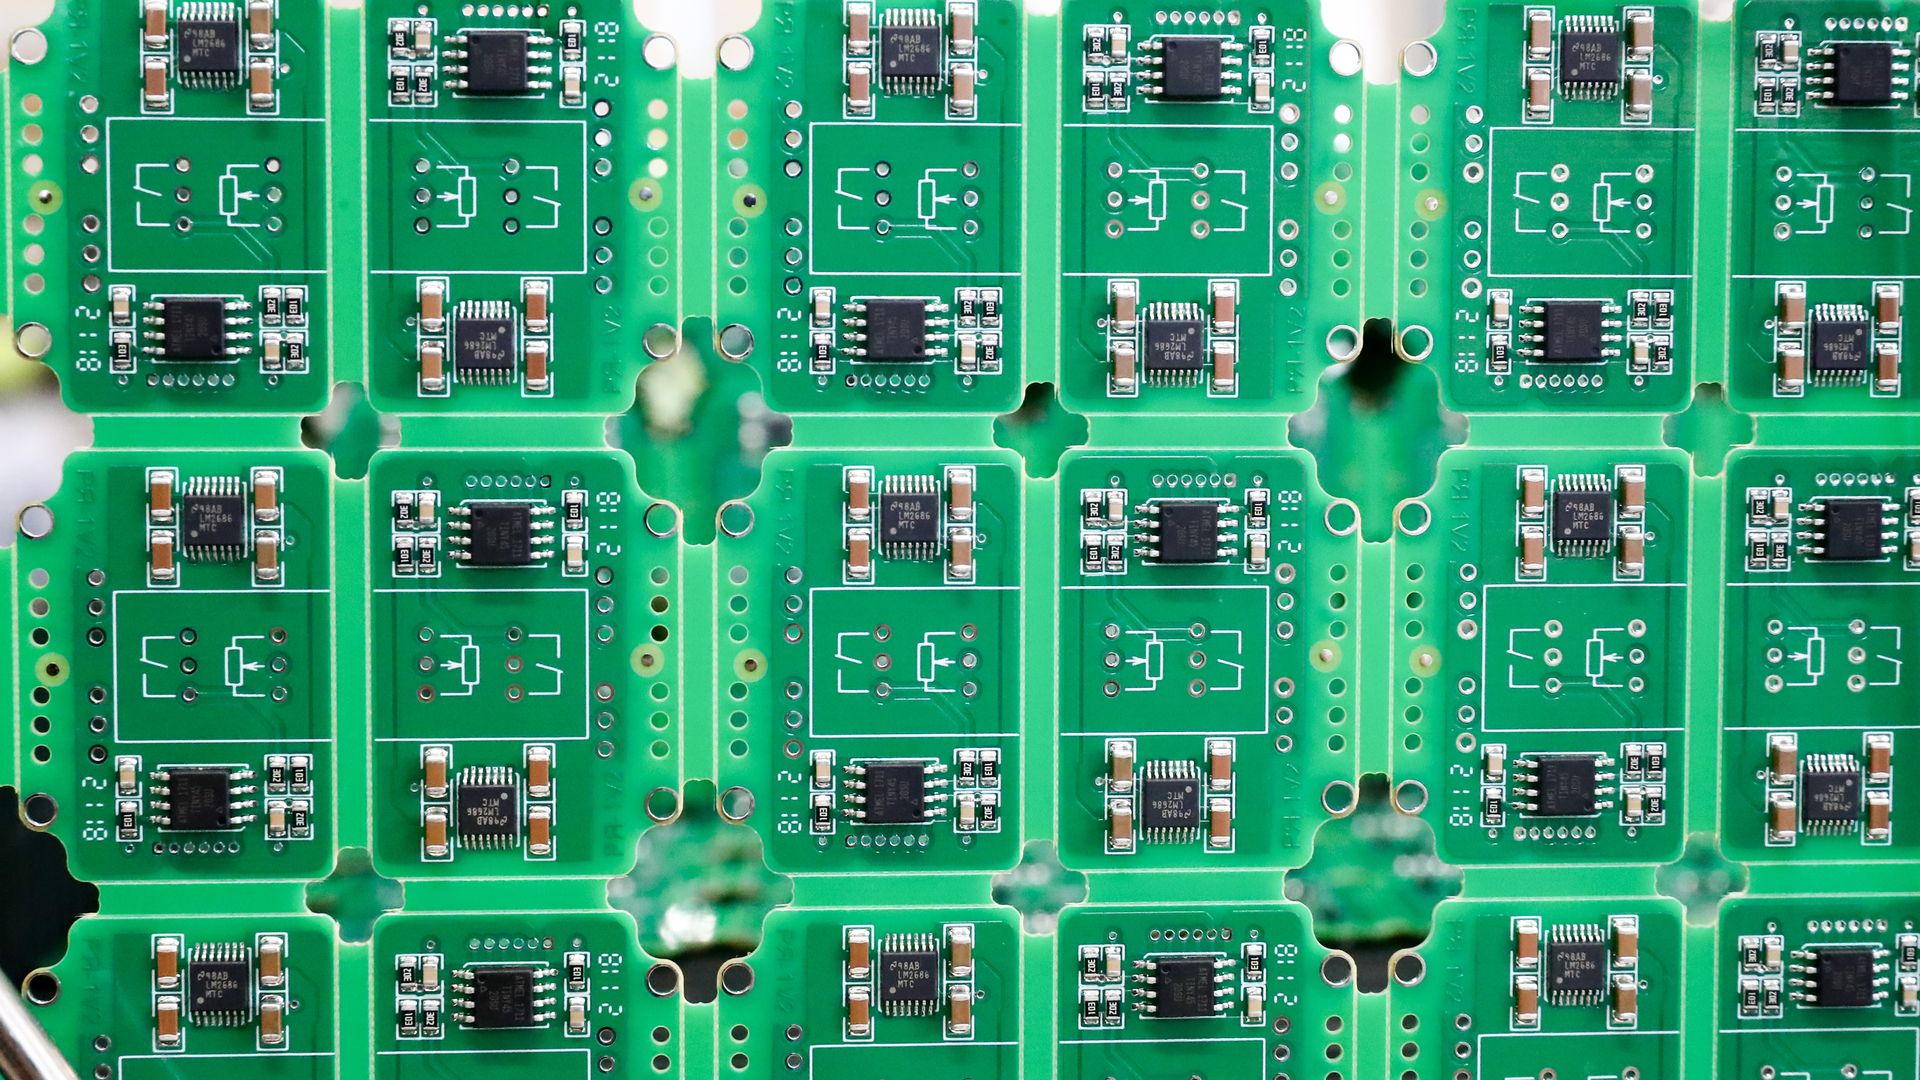 A green printed circuit board